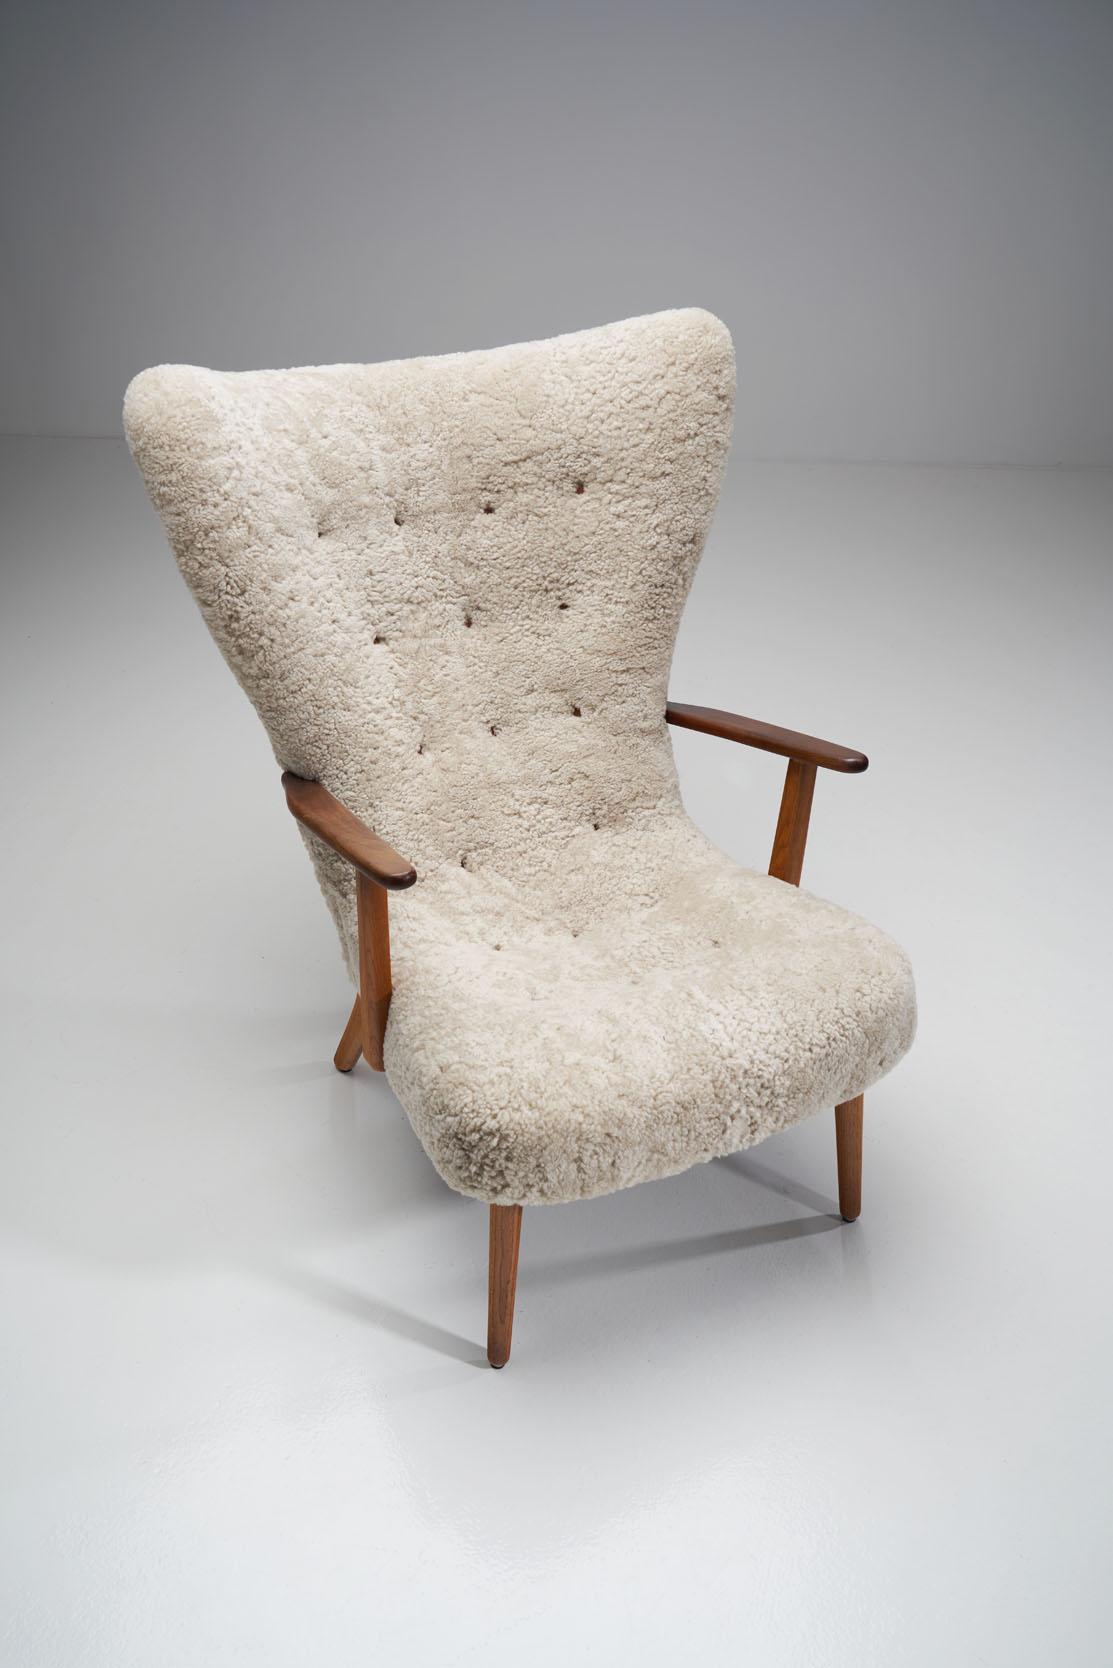 Sheepskin “The Prague Chair” by Madsen & Schubell, Denmark, 1950s